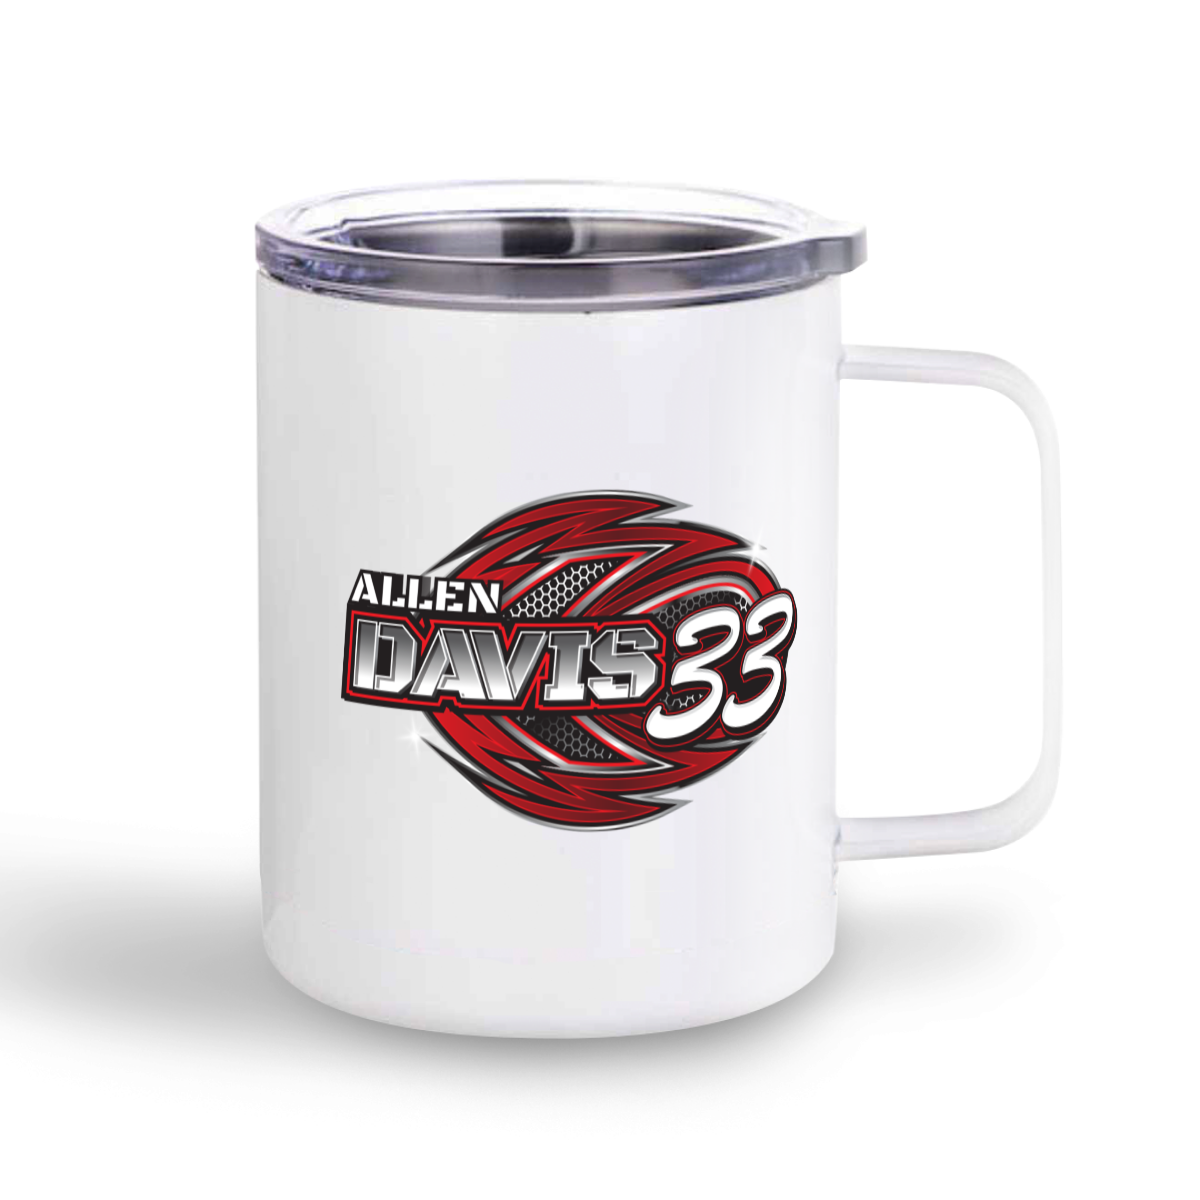 #33 Allen Davis 2022 stainless steel mug with lid